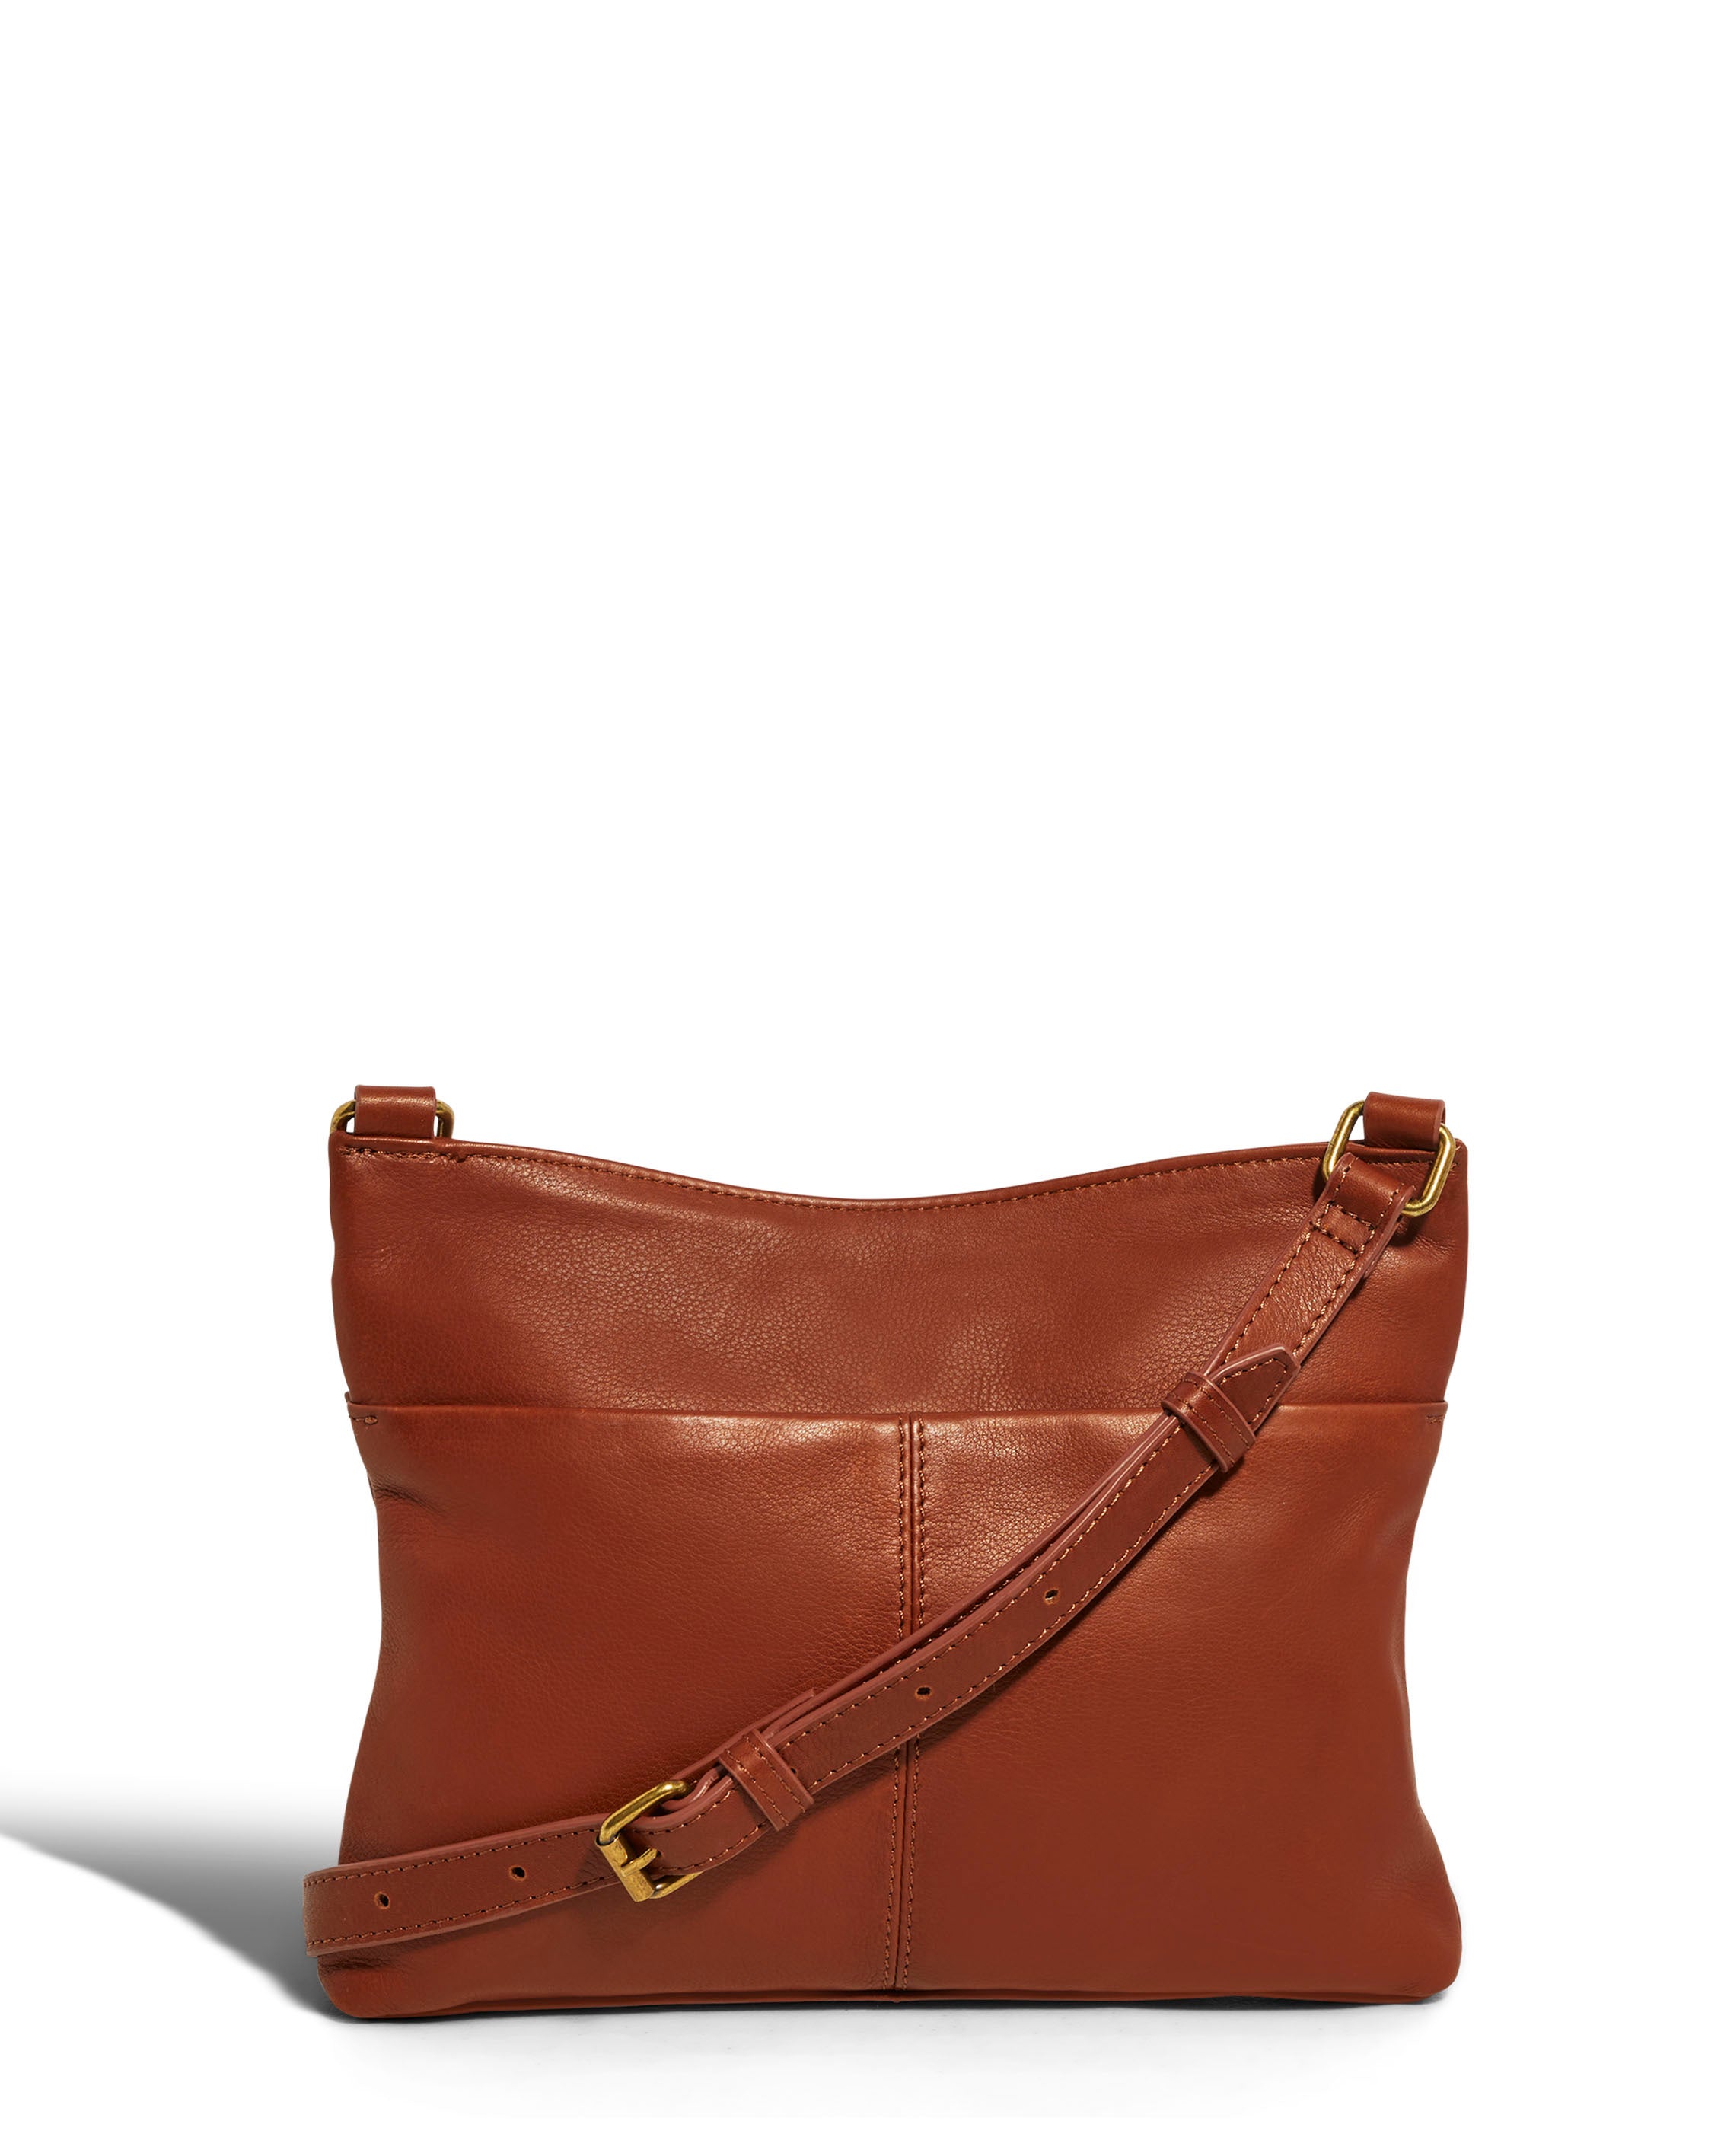 American Leather Co. Orrin Zip Crossbody Bag